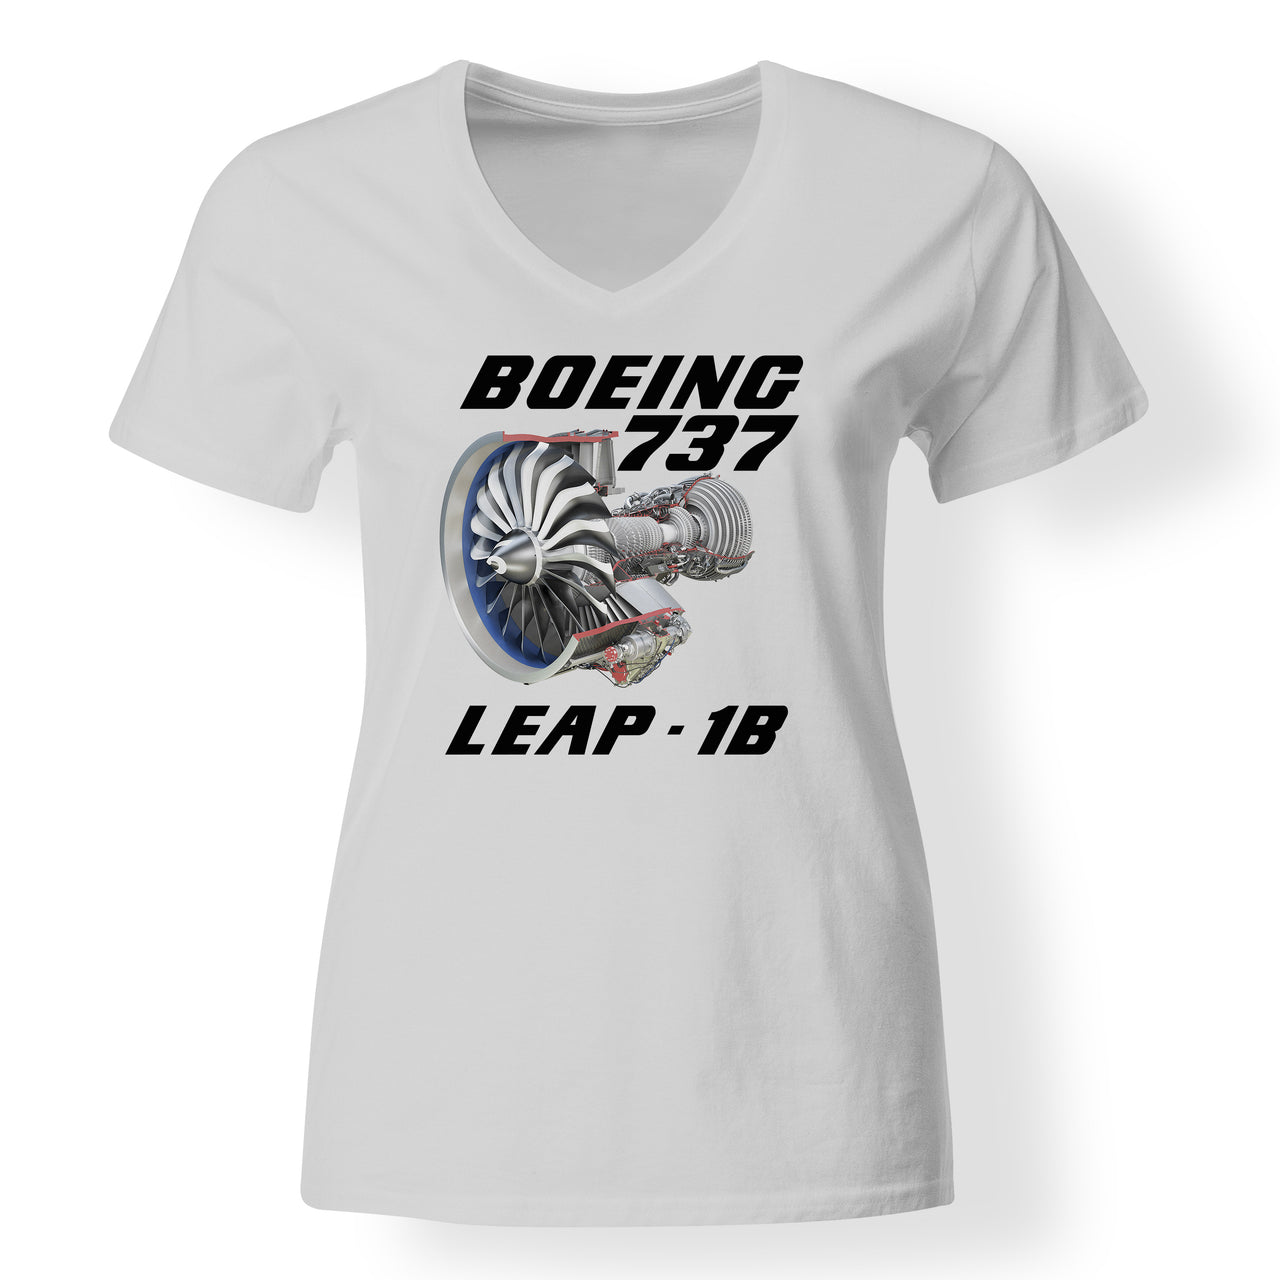 Boeing 737 & Leap 1B Engine Designed V-Neck T-Shirts